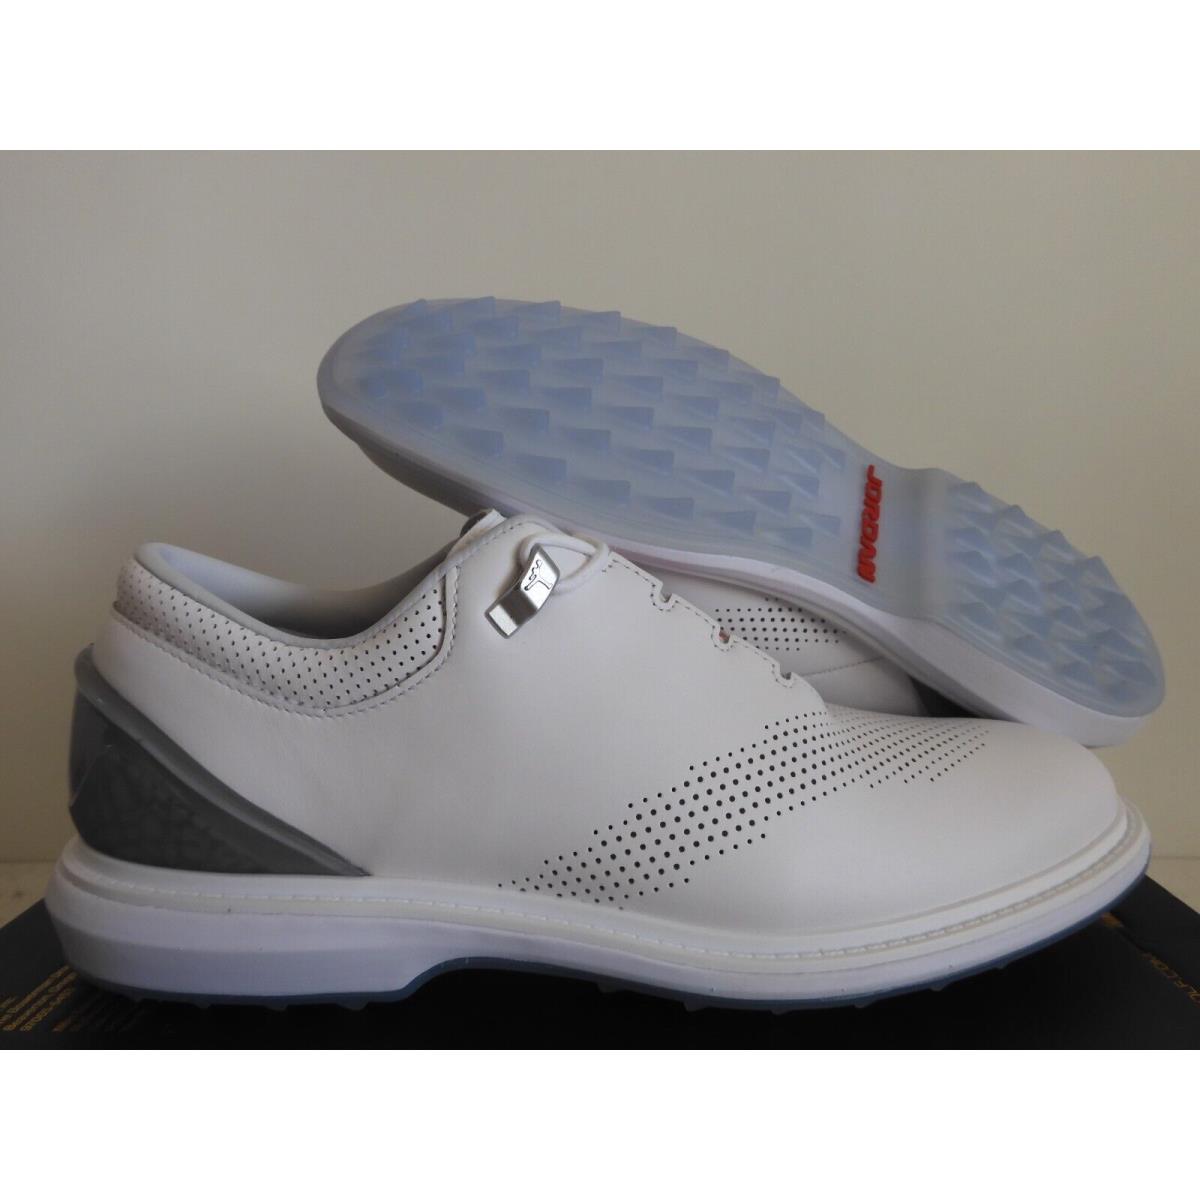 Nike Jordan Adg 4 Golf Cleats White-black-pure Platinum SZ 9 DM0103-105